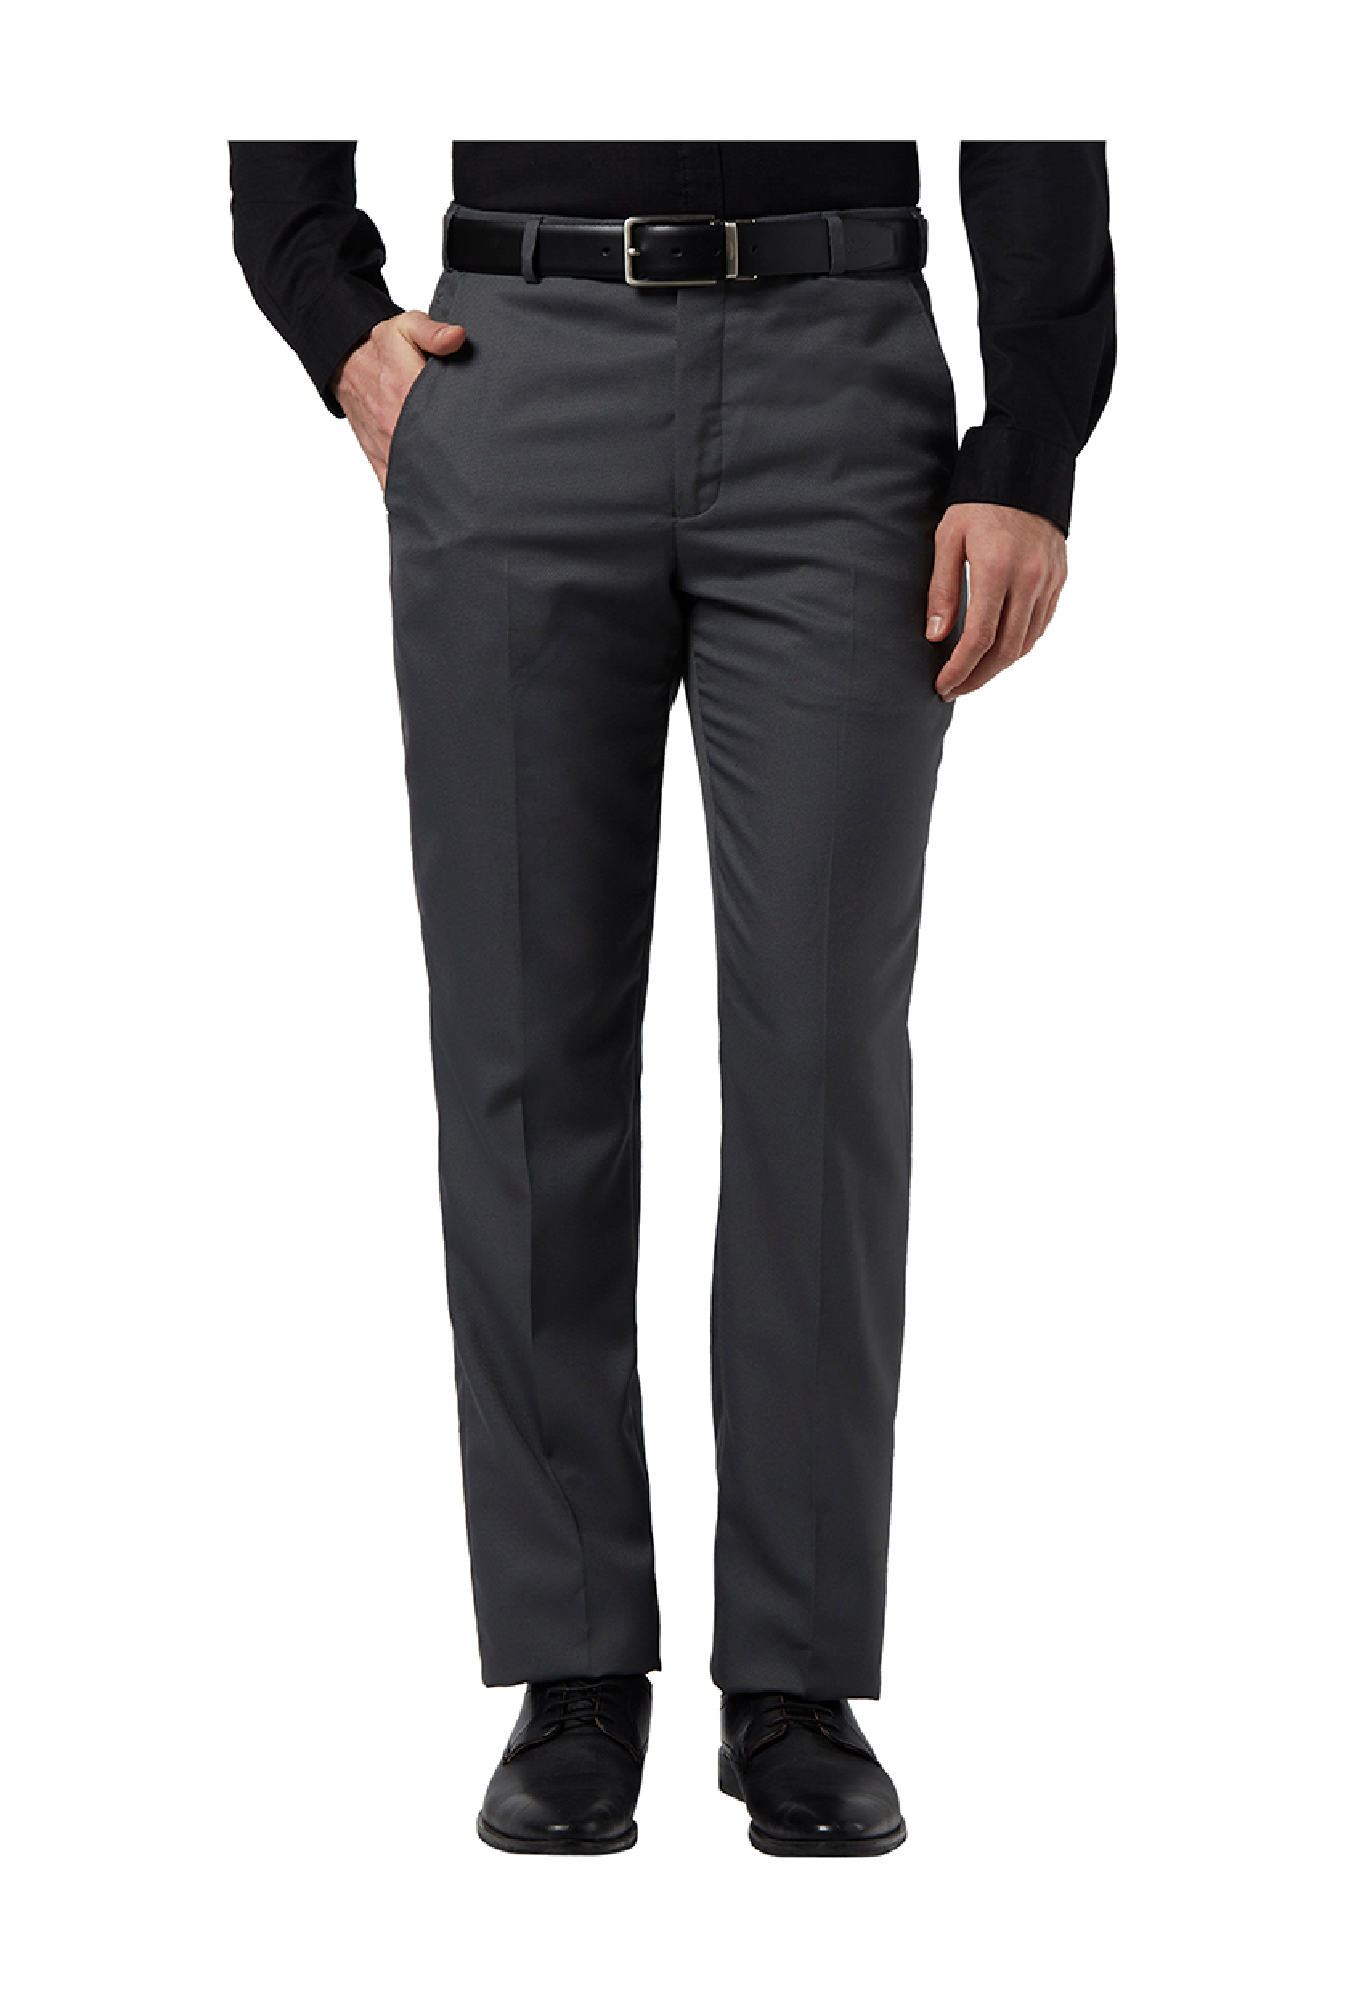 Buy Peter England Men Grey Slim Fit Formal Trousers  Trousers for Men  188571  Myntra